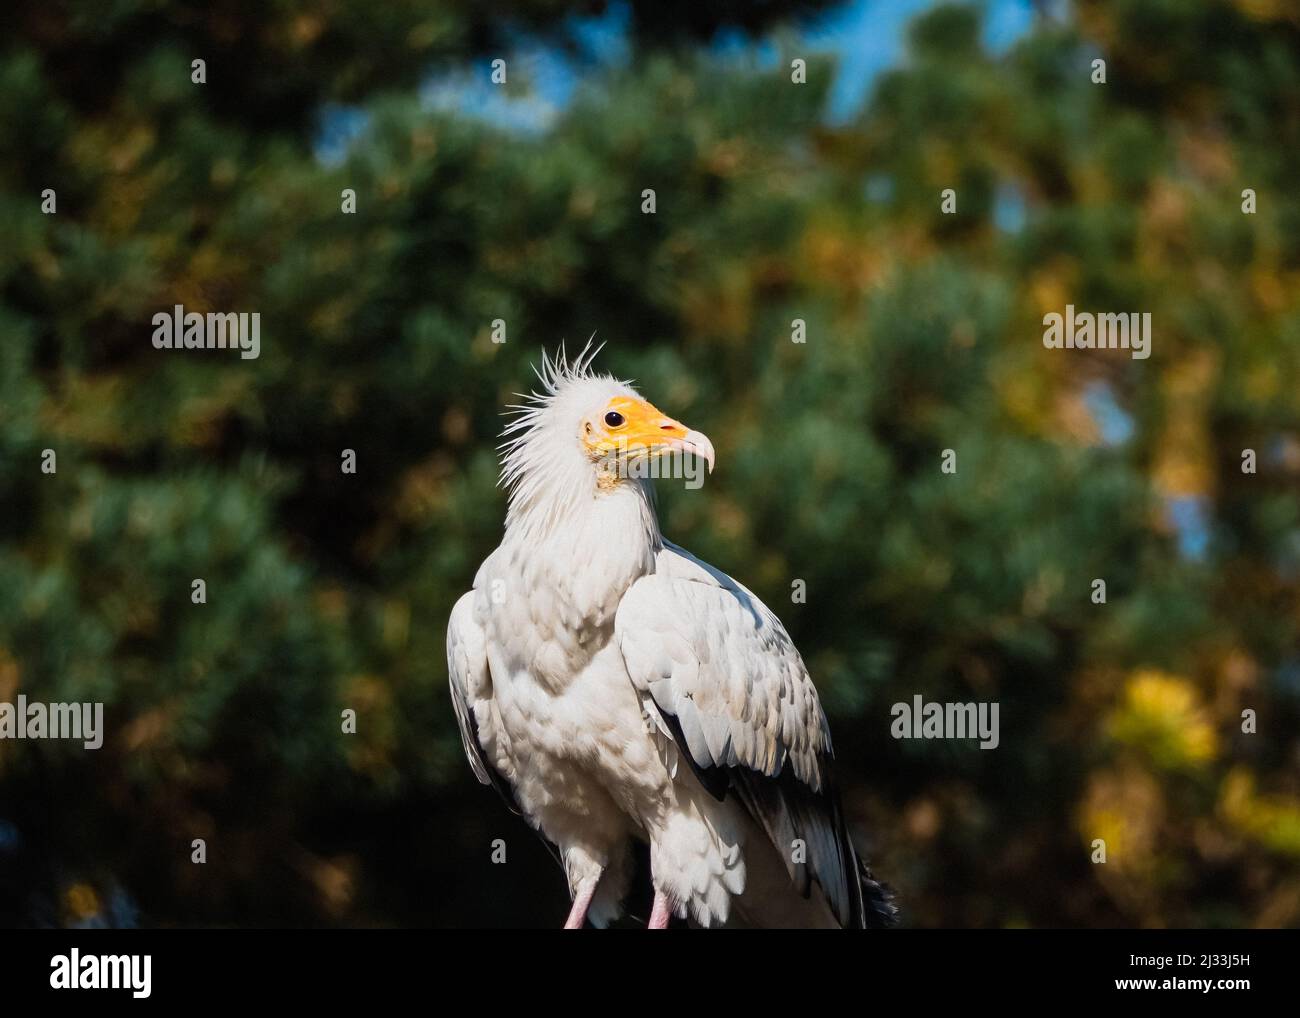 Portrait of a white Egyptian vulture bird Stock Photo